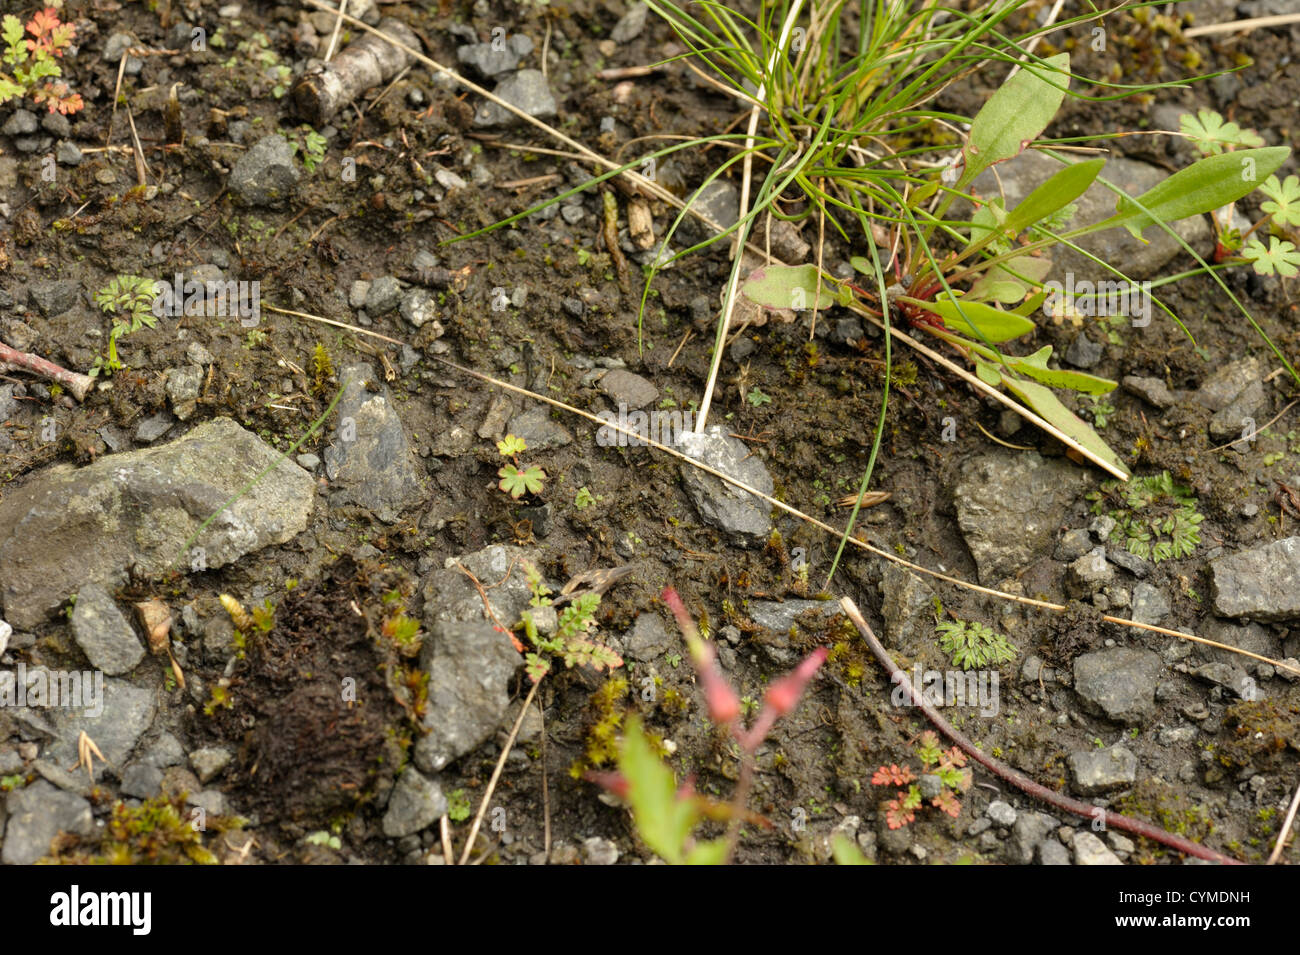 Black Crystalwort, Riccia nigrella, habitat with the minute plants just visible Stock Photo